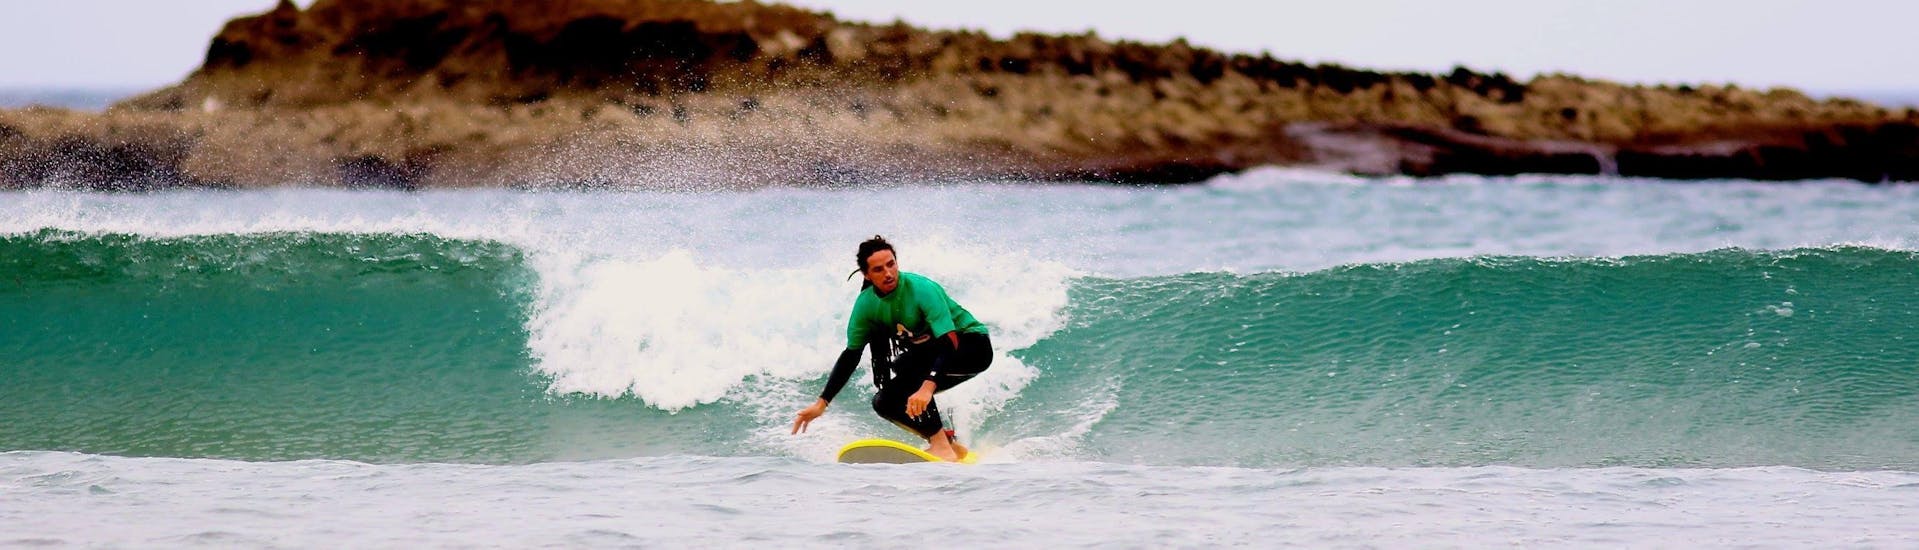 Curso de Surf en Carrapateira a partir de 6 años para principiantes.